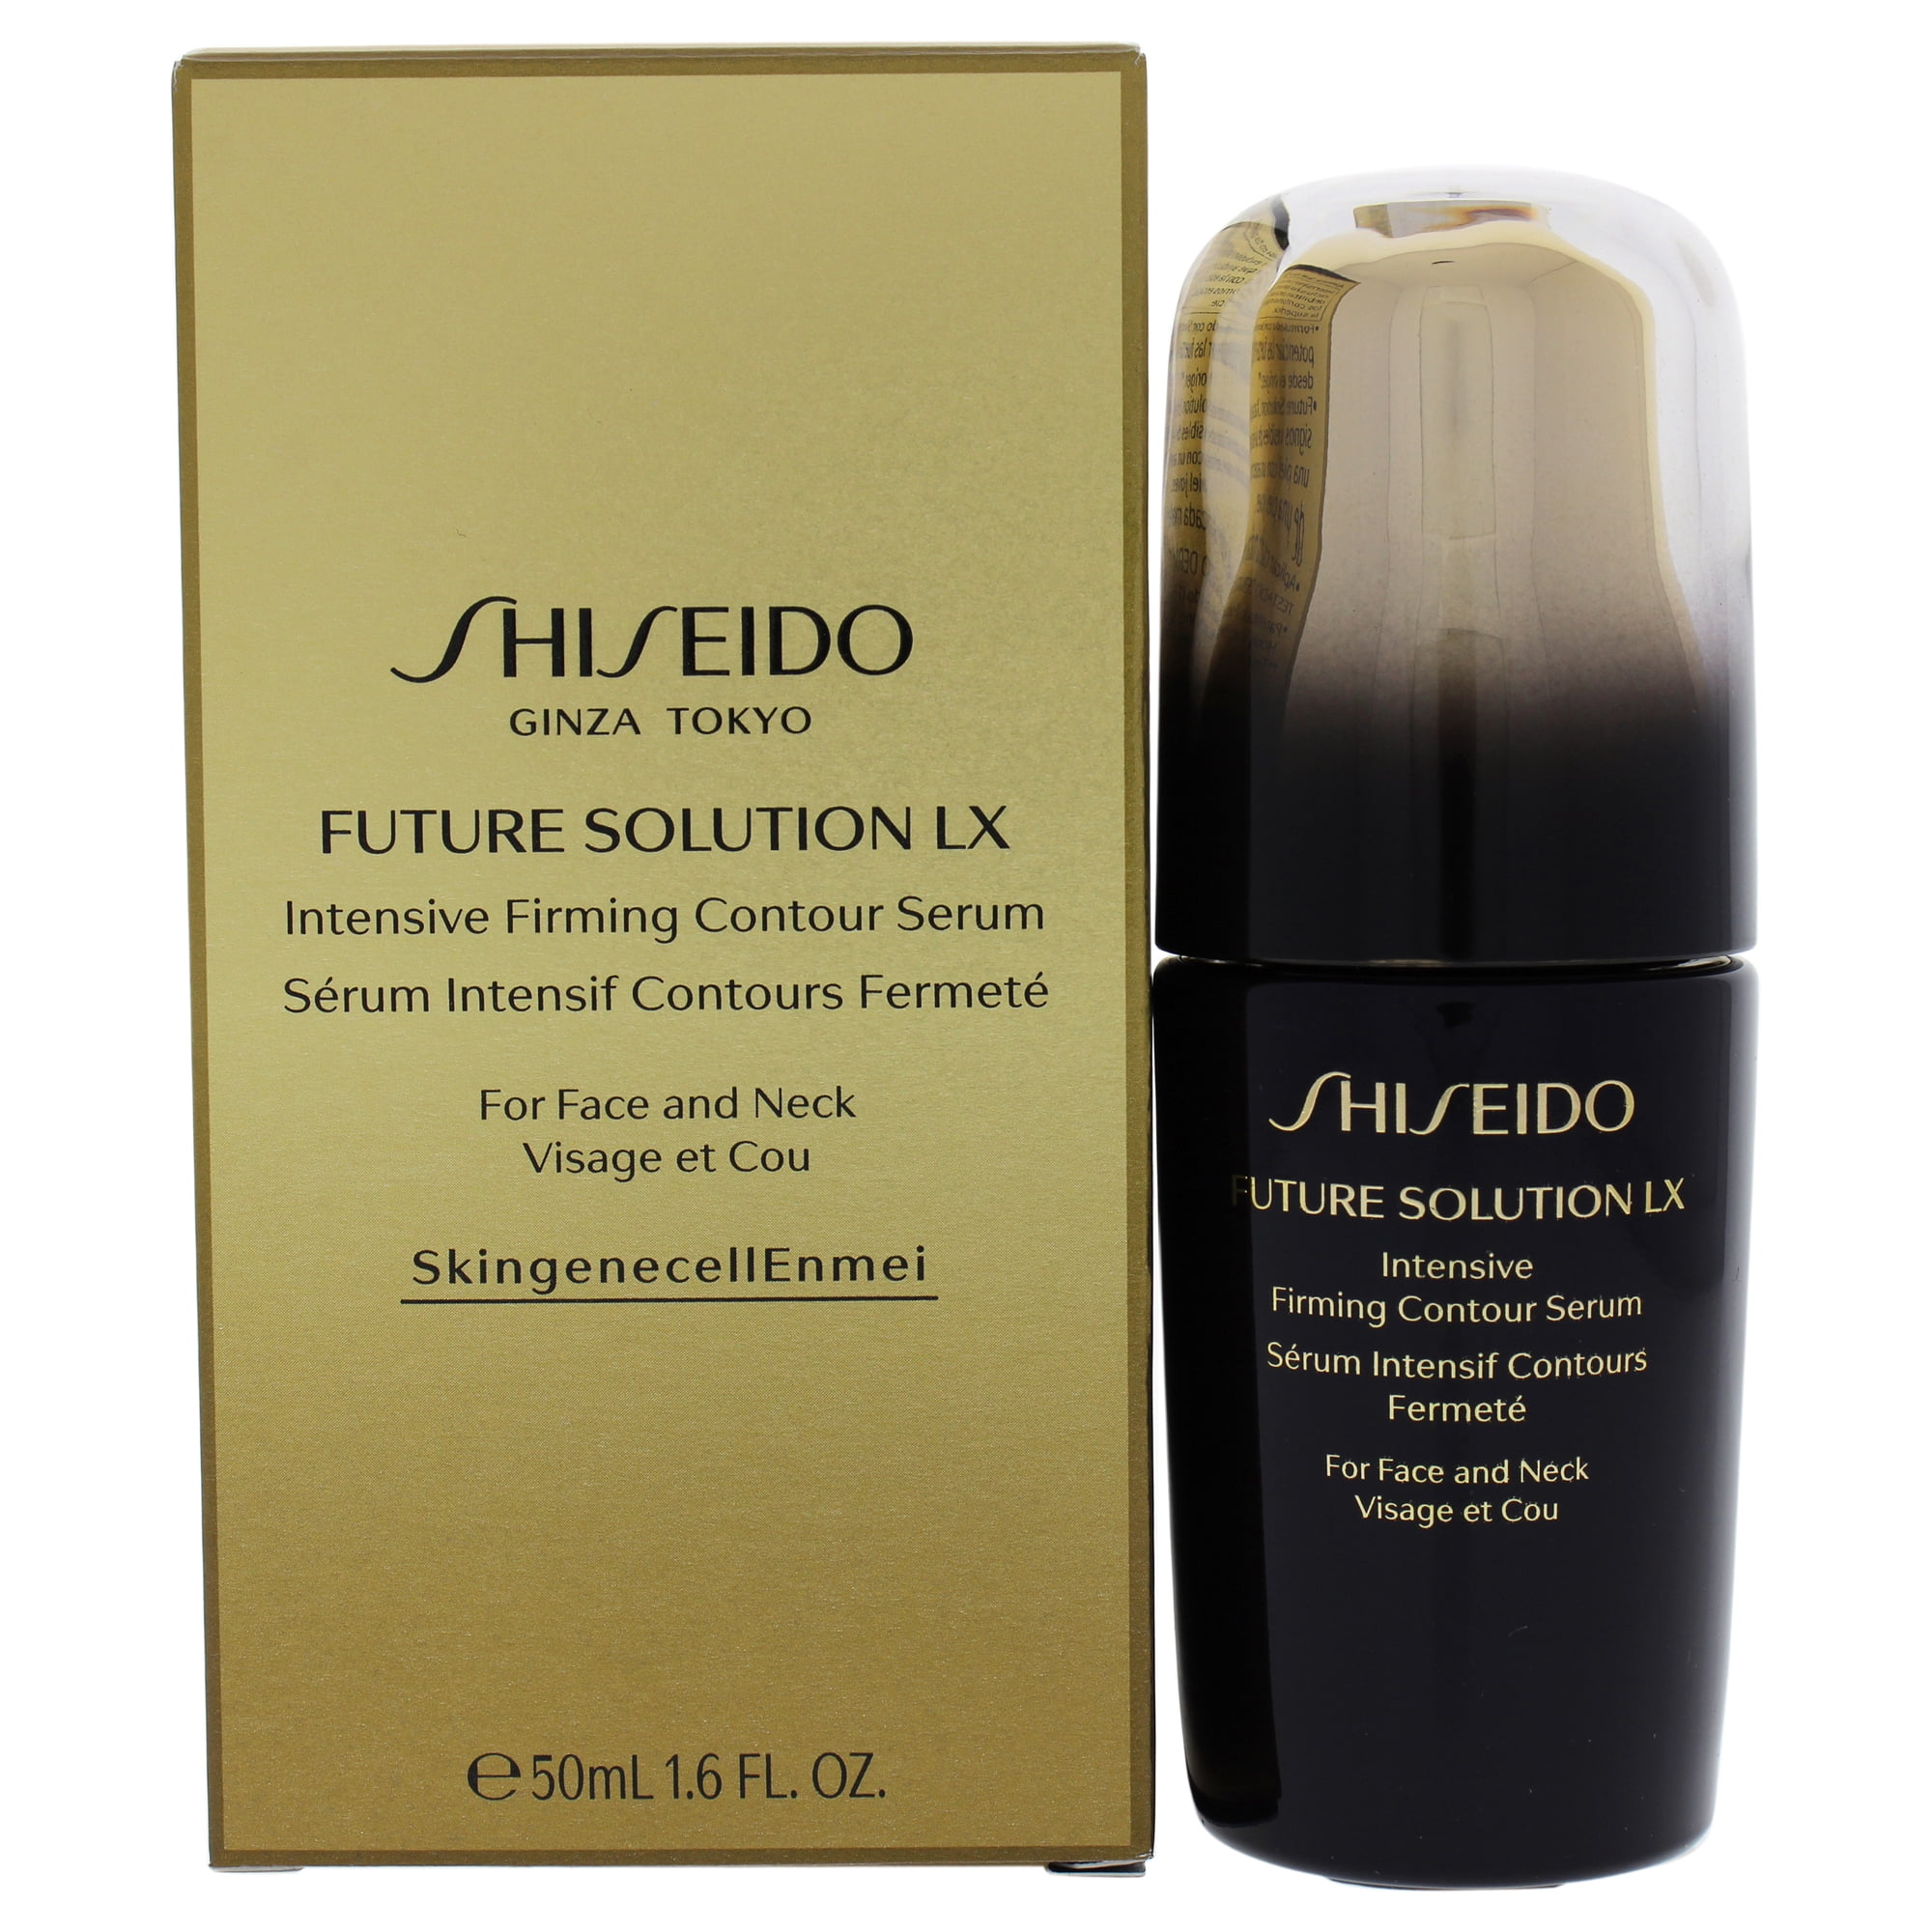 Shiseido Future solution LX Serum. Shiseido Future solution LX ночной крем чье производство. Шисейдо тон Футуре отзывы. Shiseido 101 Ginkgo отзывы. Shiseido solution